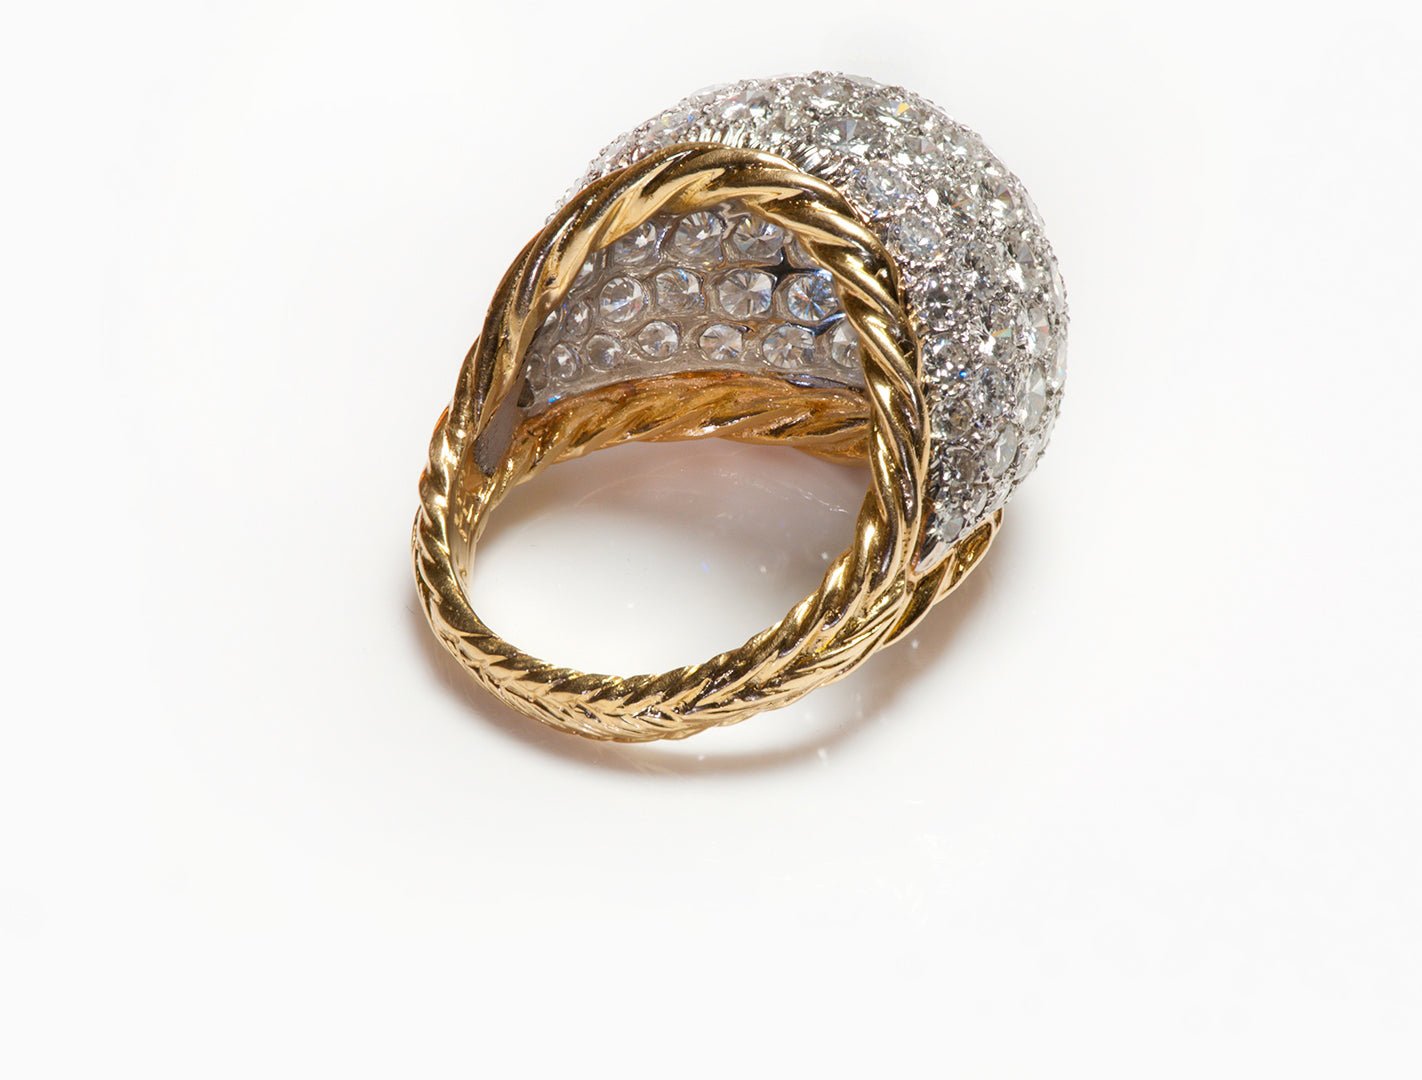 Hammerman Brothers 18K Gold Platinum Diamond Ring